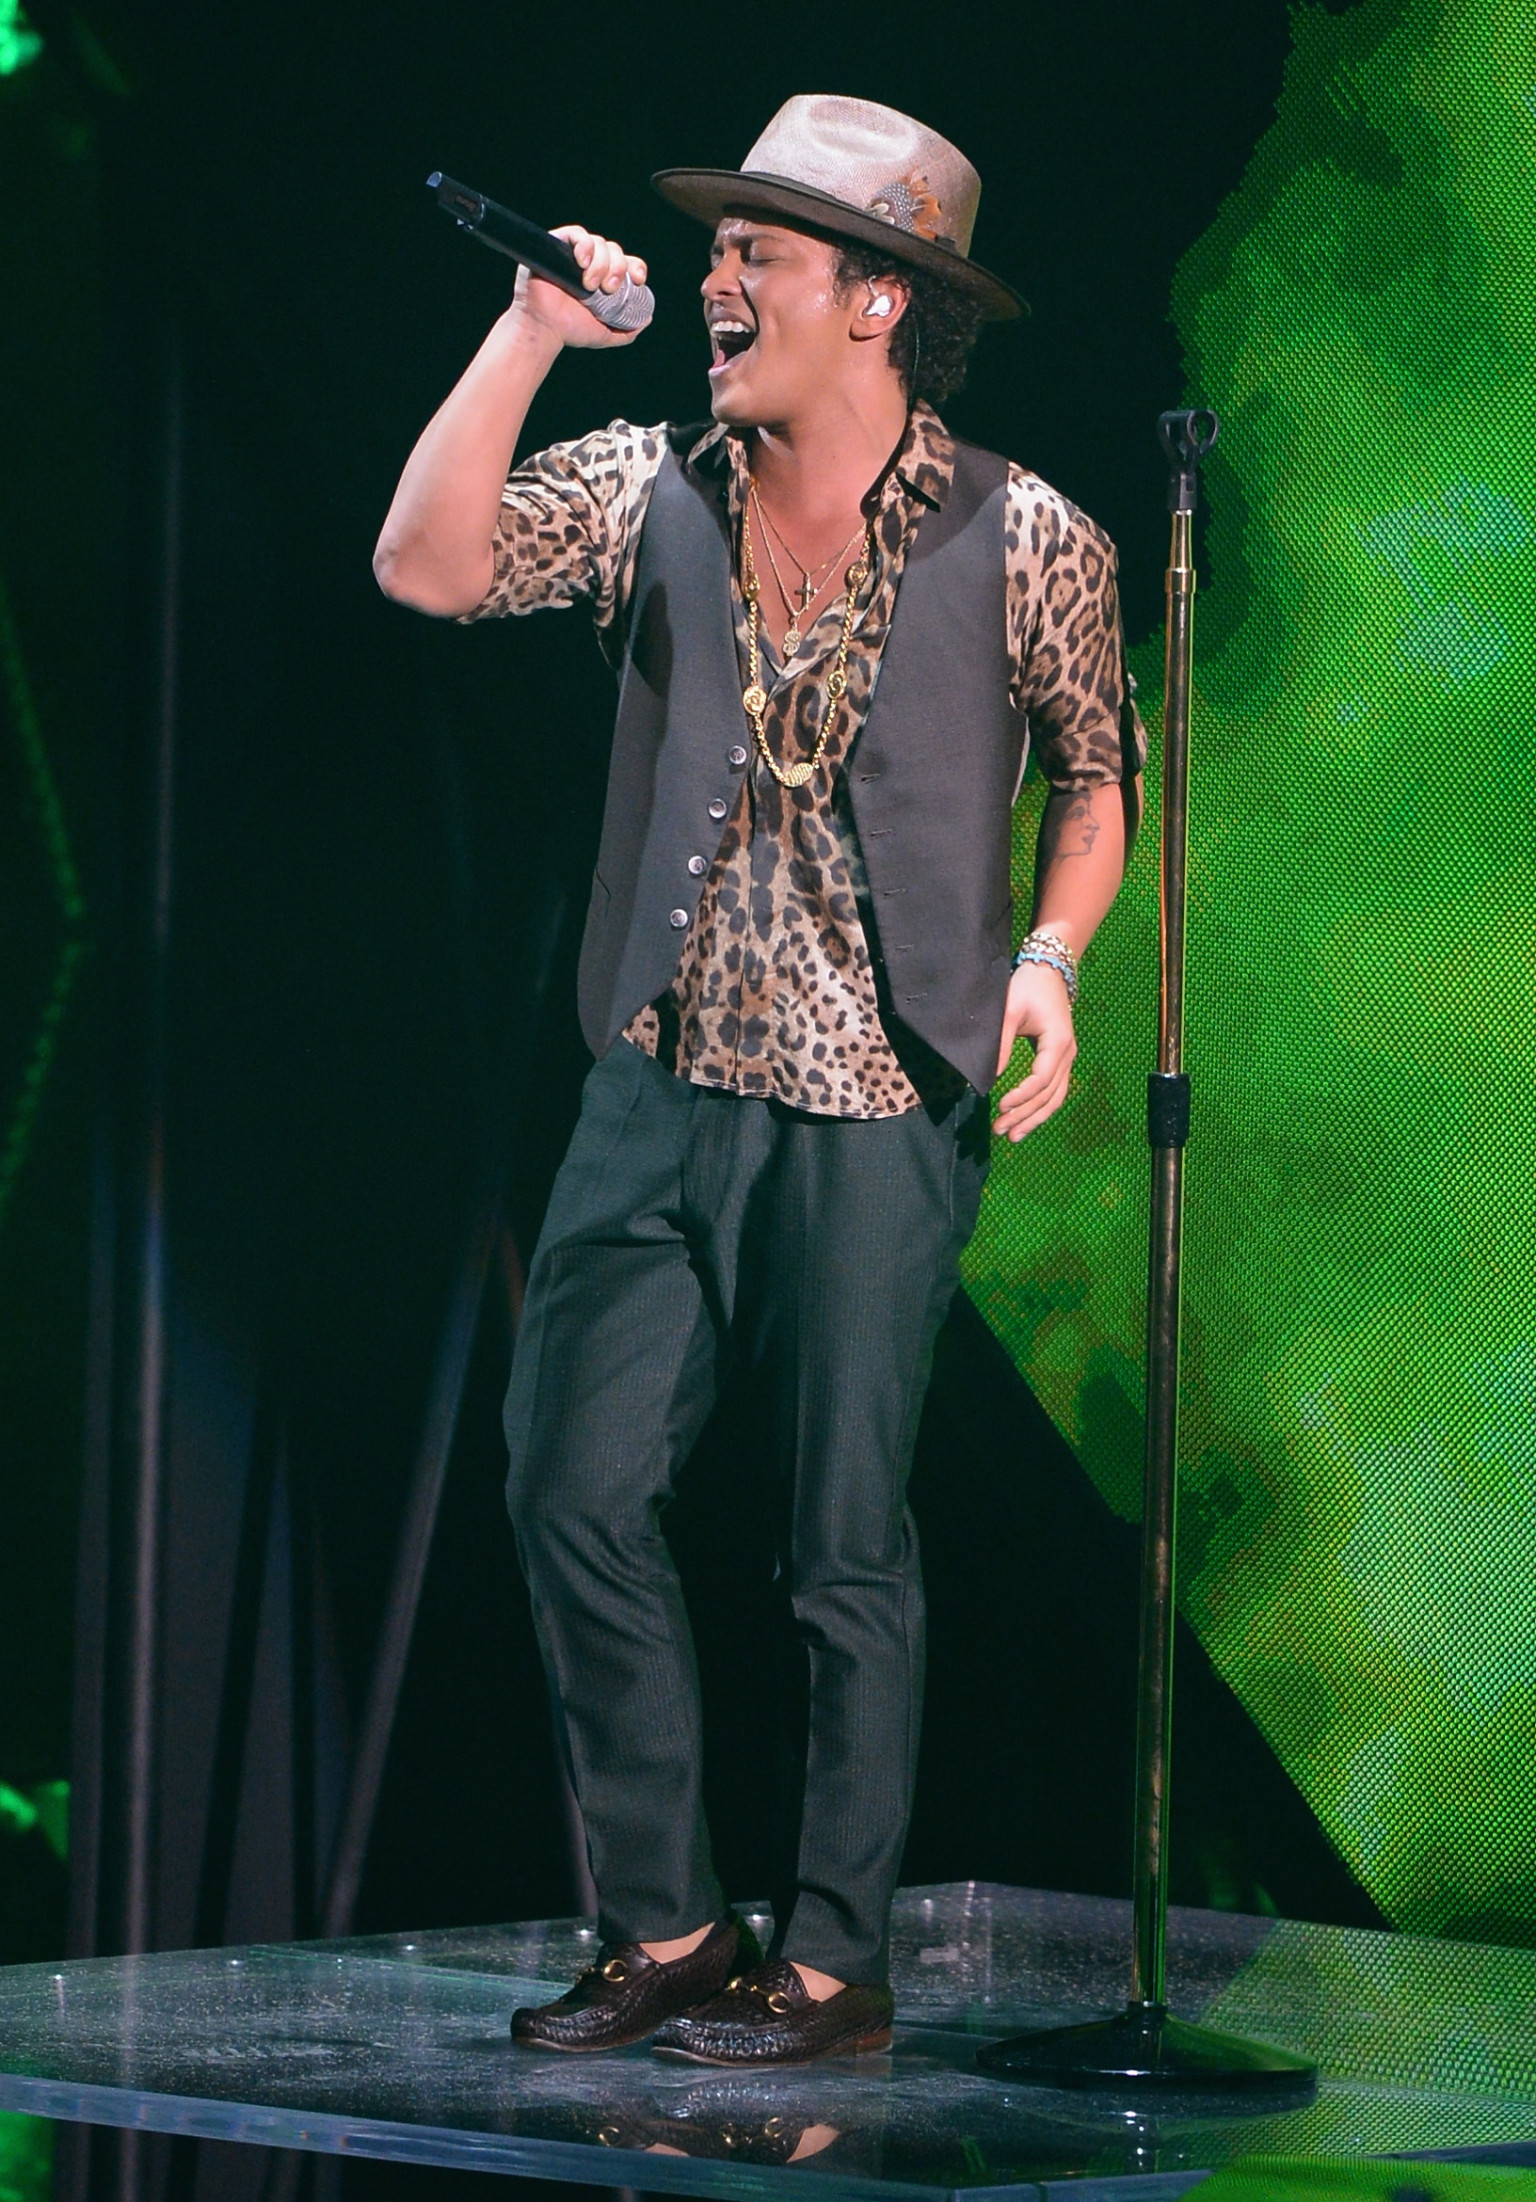 Best Male Video VMA: Bruno Mars Wins Moon Man At 2013 Video Music Awards